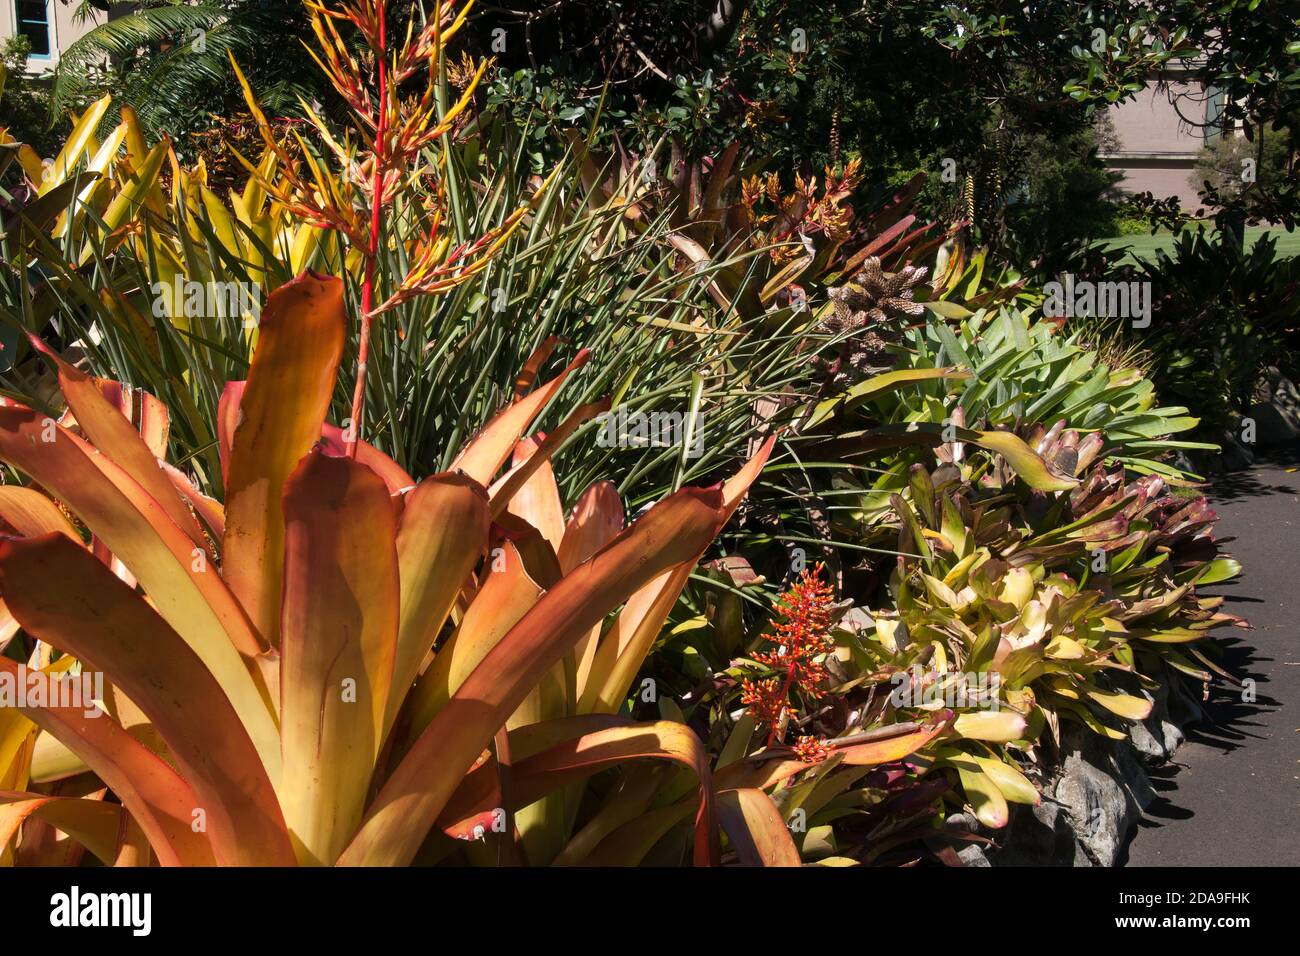 Sydney Australia, garden with colorful bromeliad plants Stock Photo